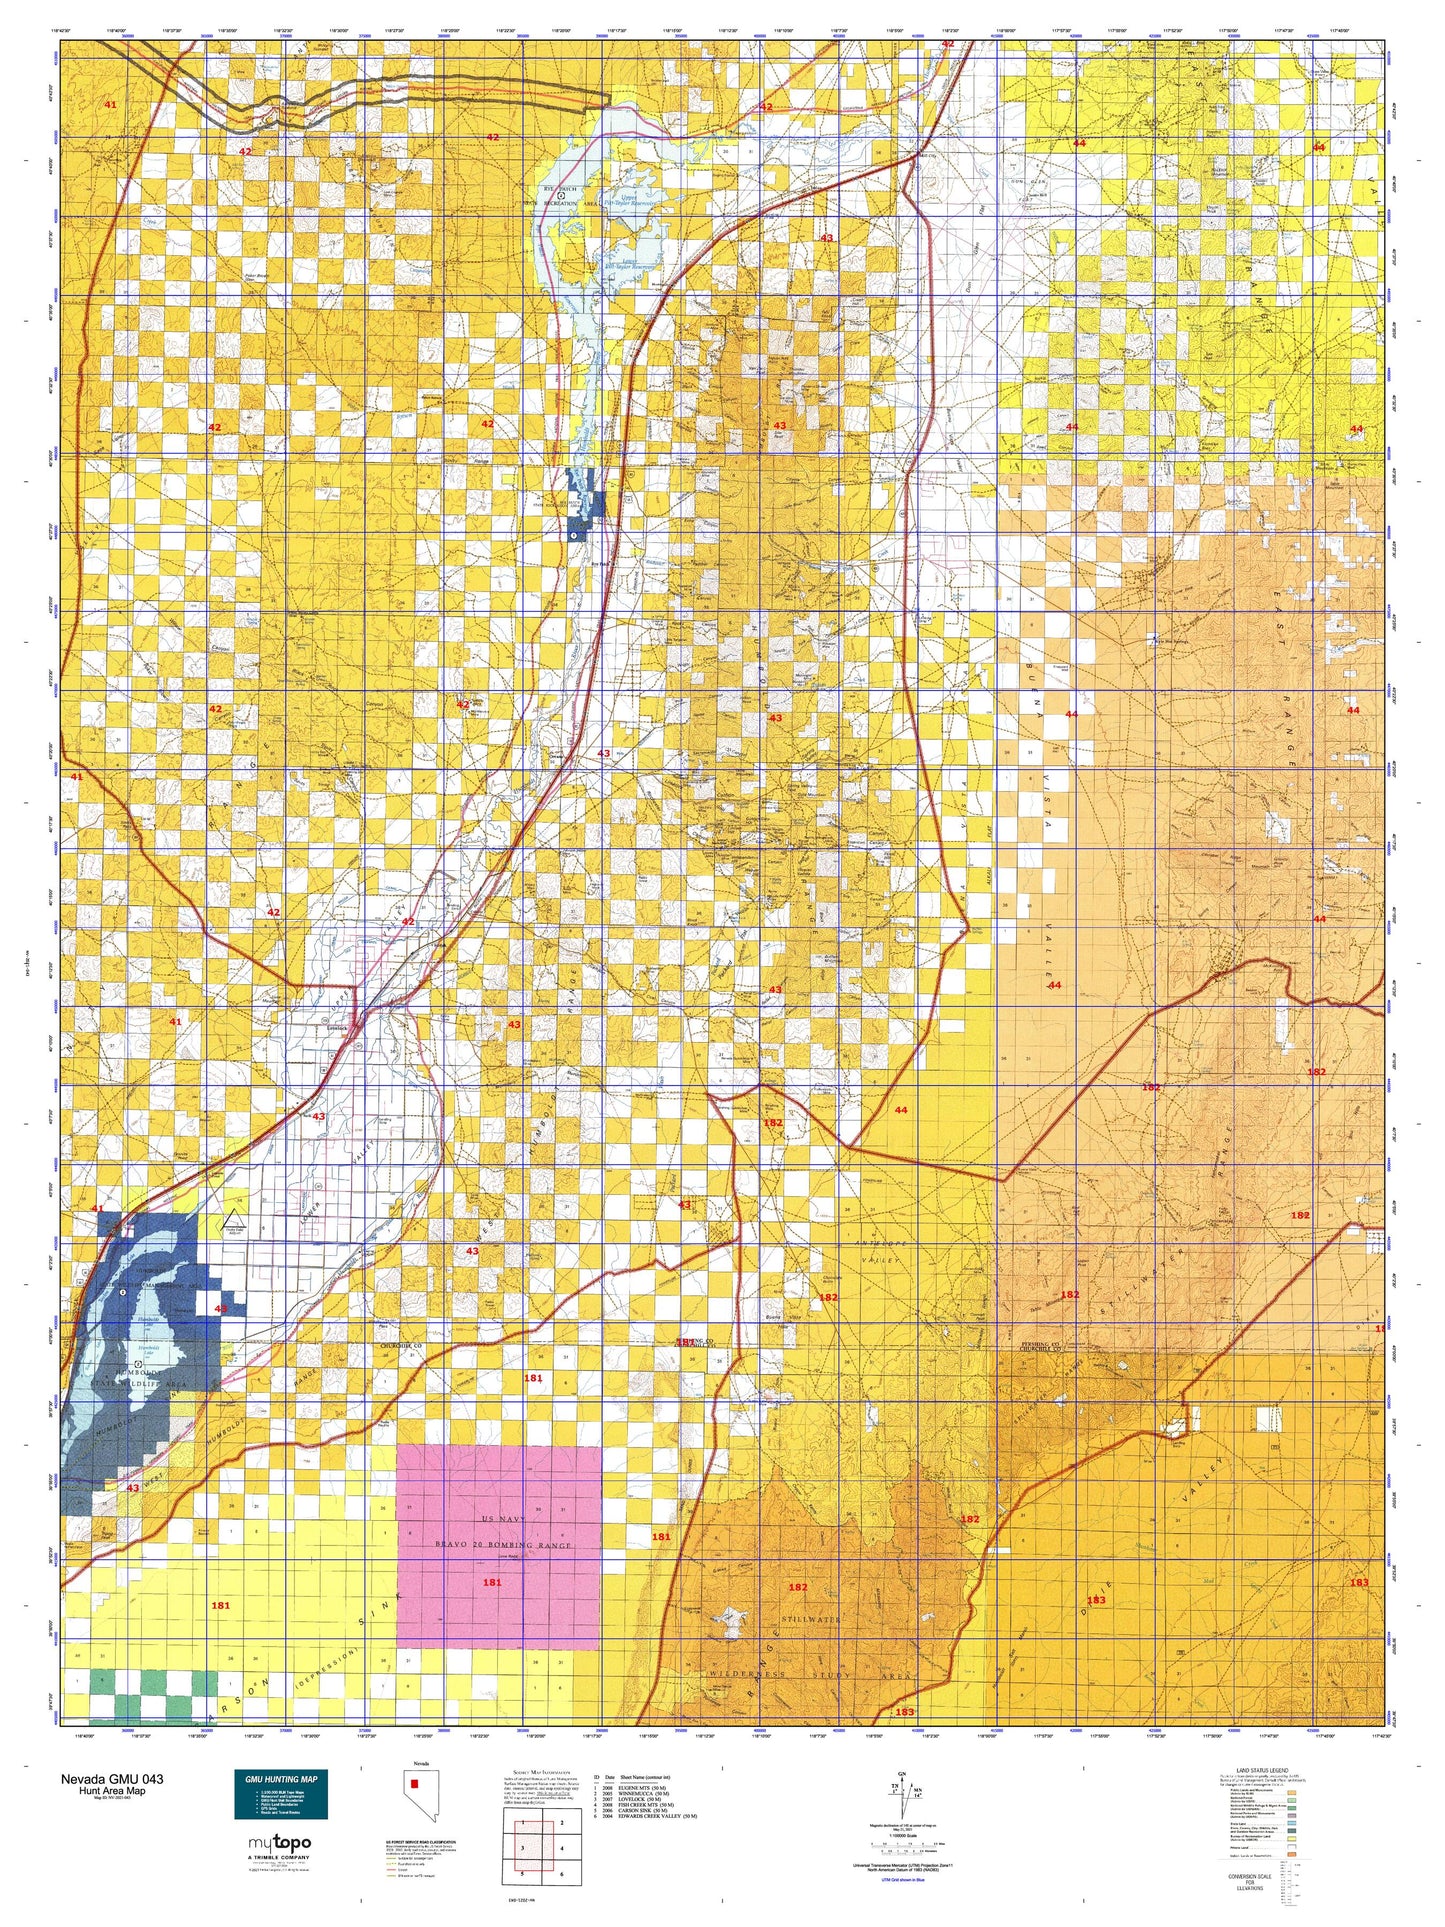 Nevada GMU 043 Map Image